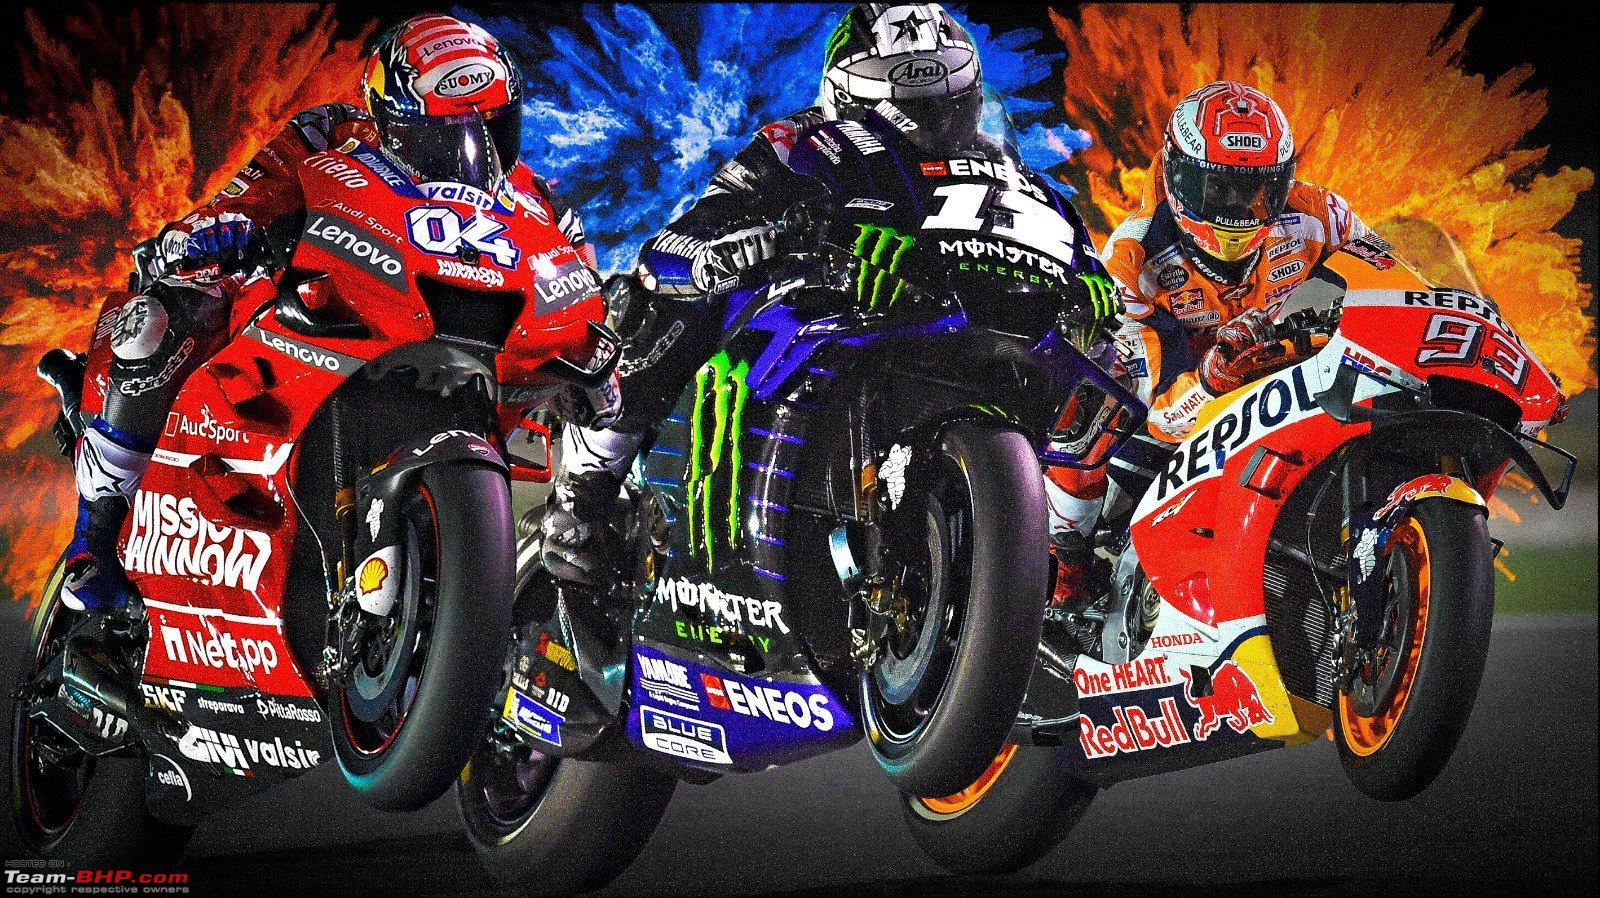 The 2019 MotoGP championship thread - Page 2